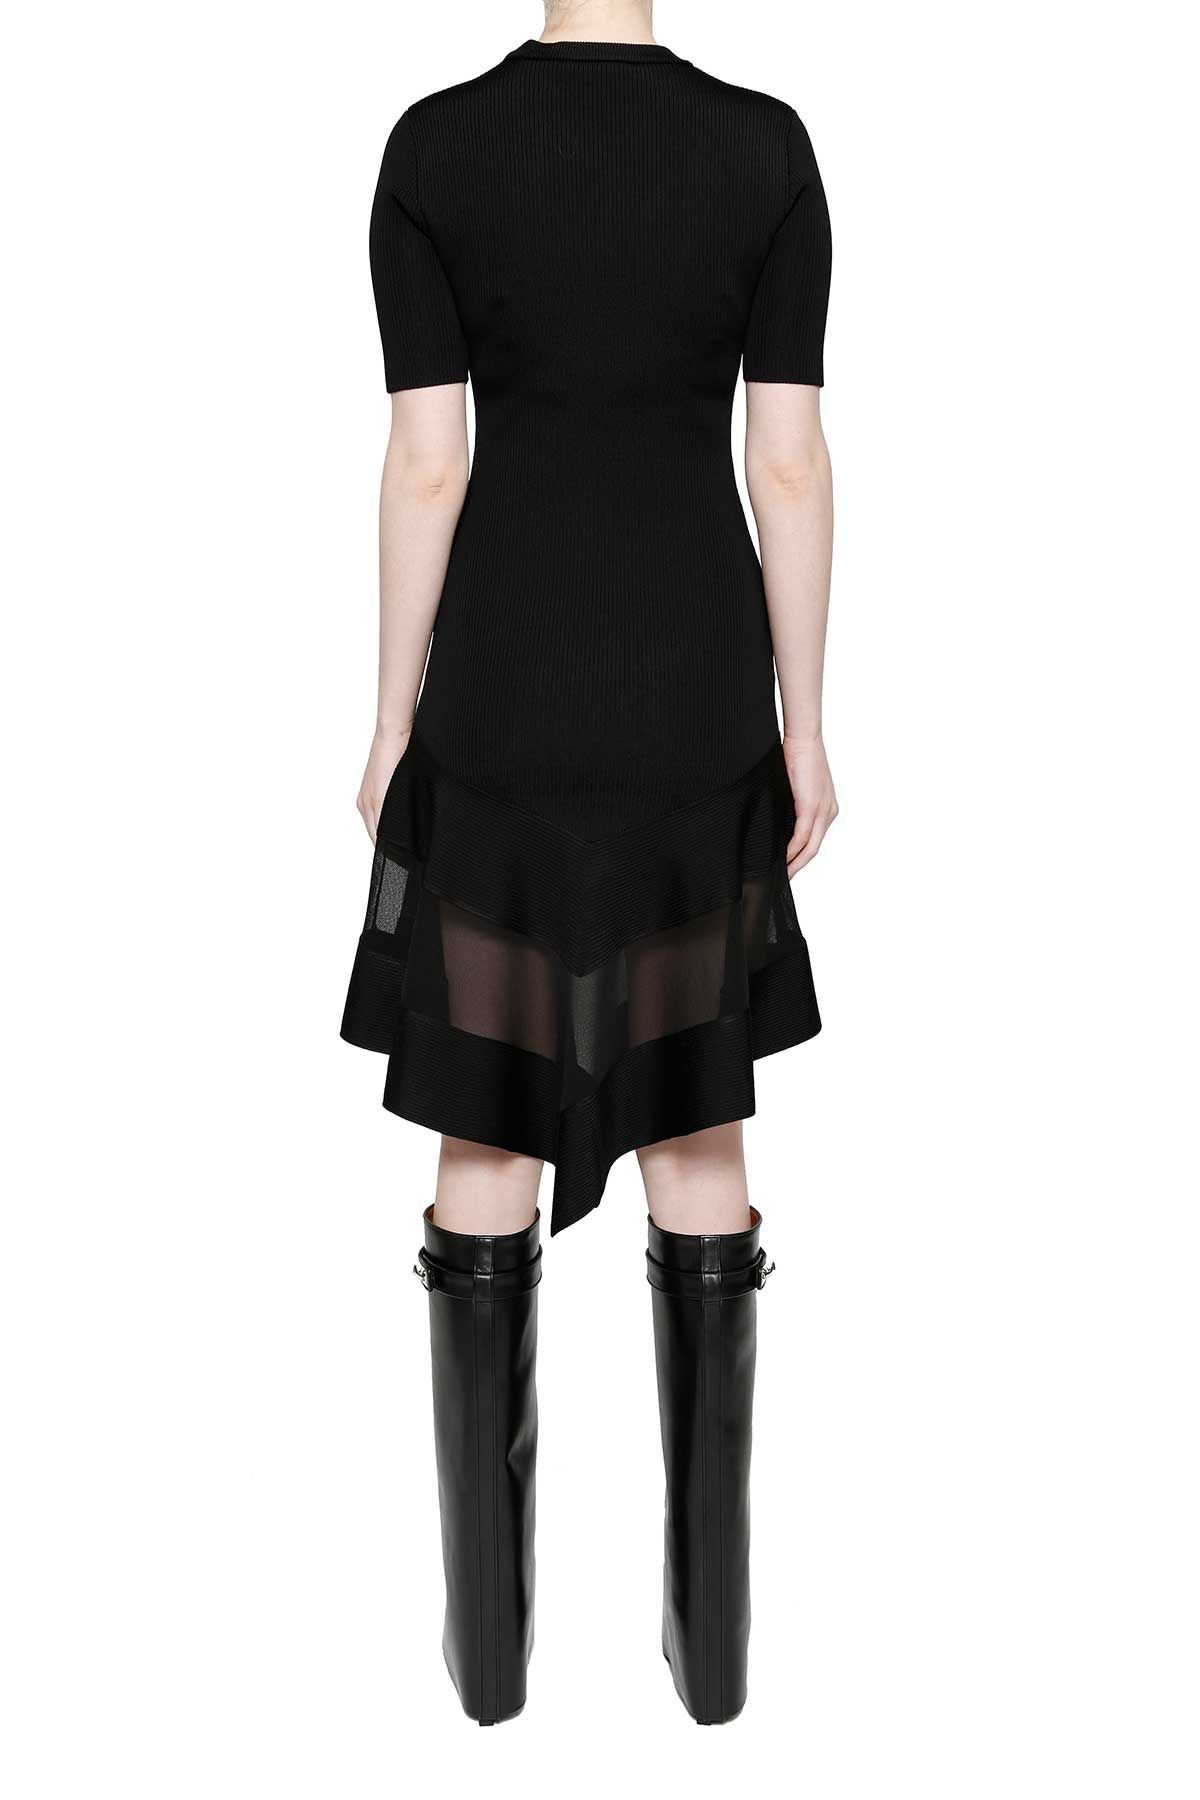 Givenchy - Givenchy Stripe Dress - Black, Women's Dresses | Italist